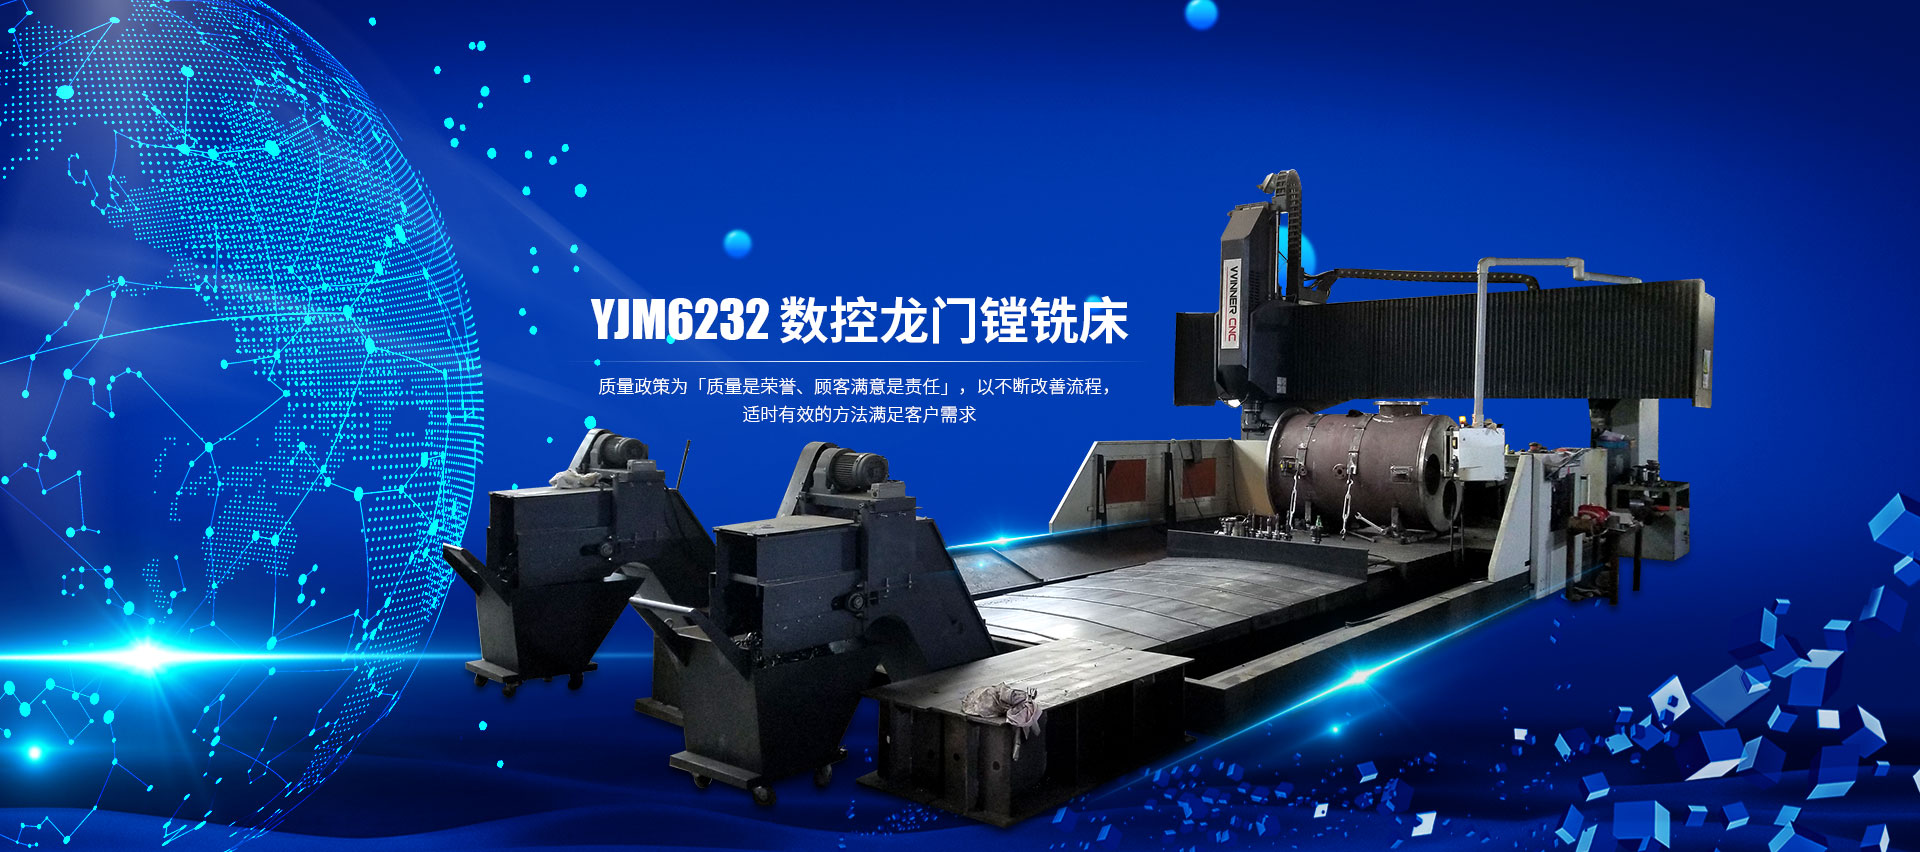 YJM6232 數控龍門鏜銑床